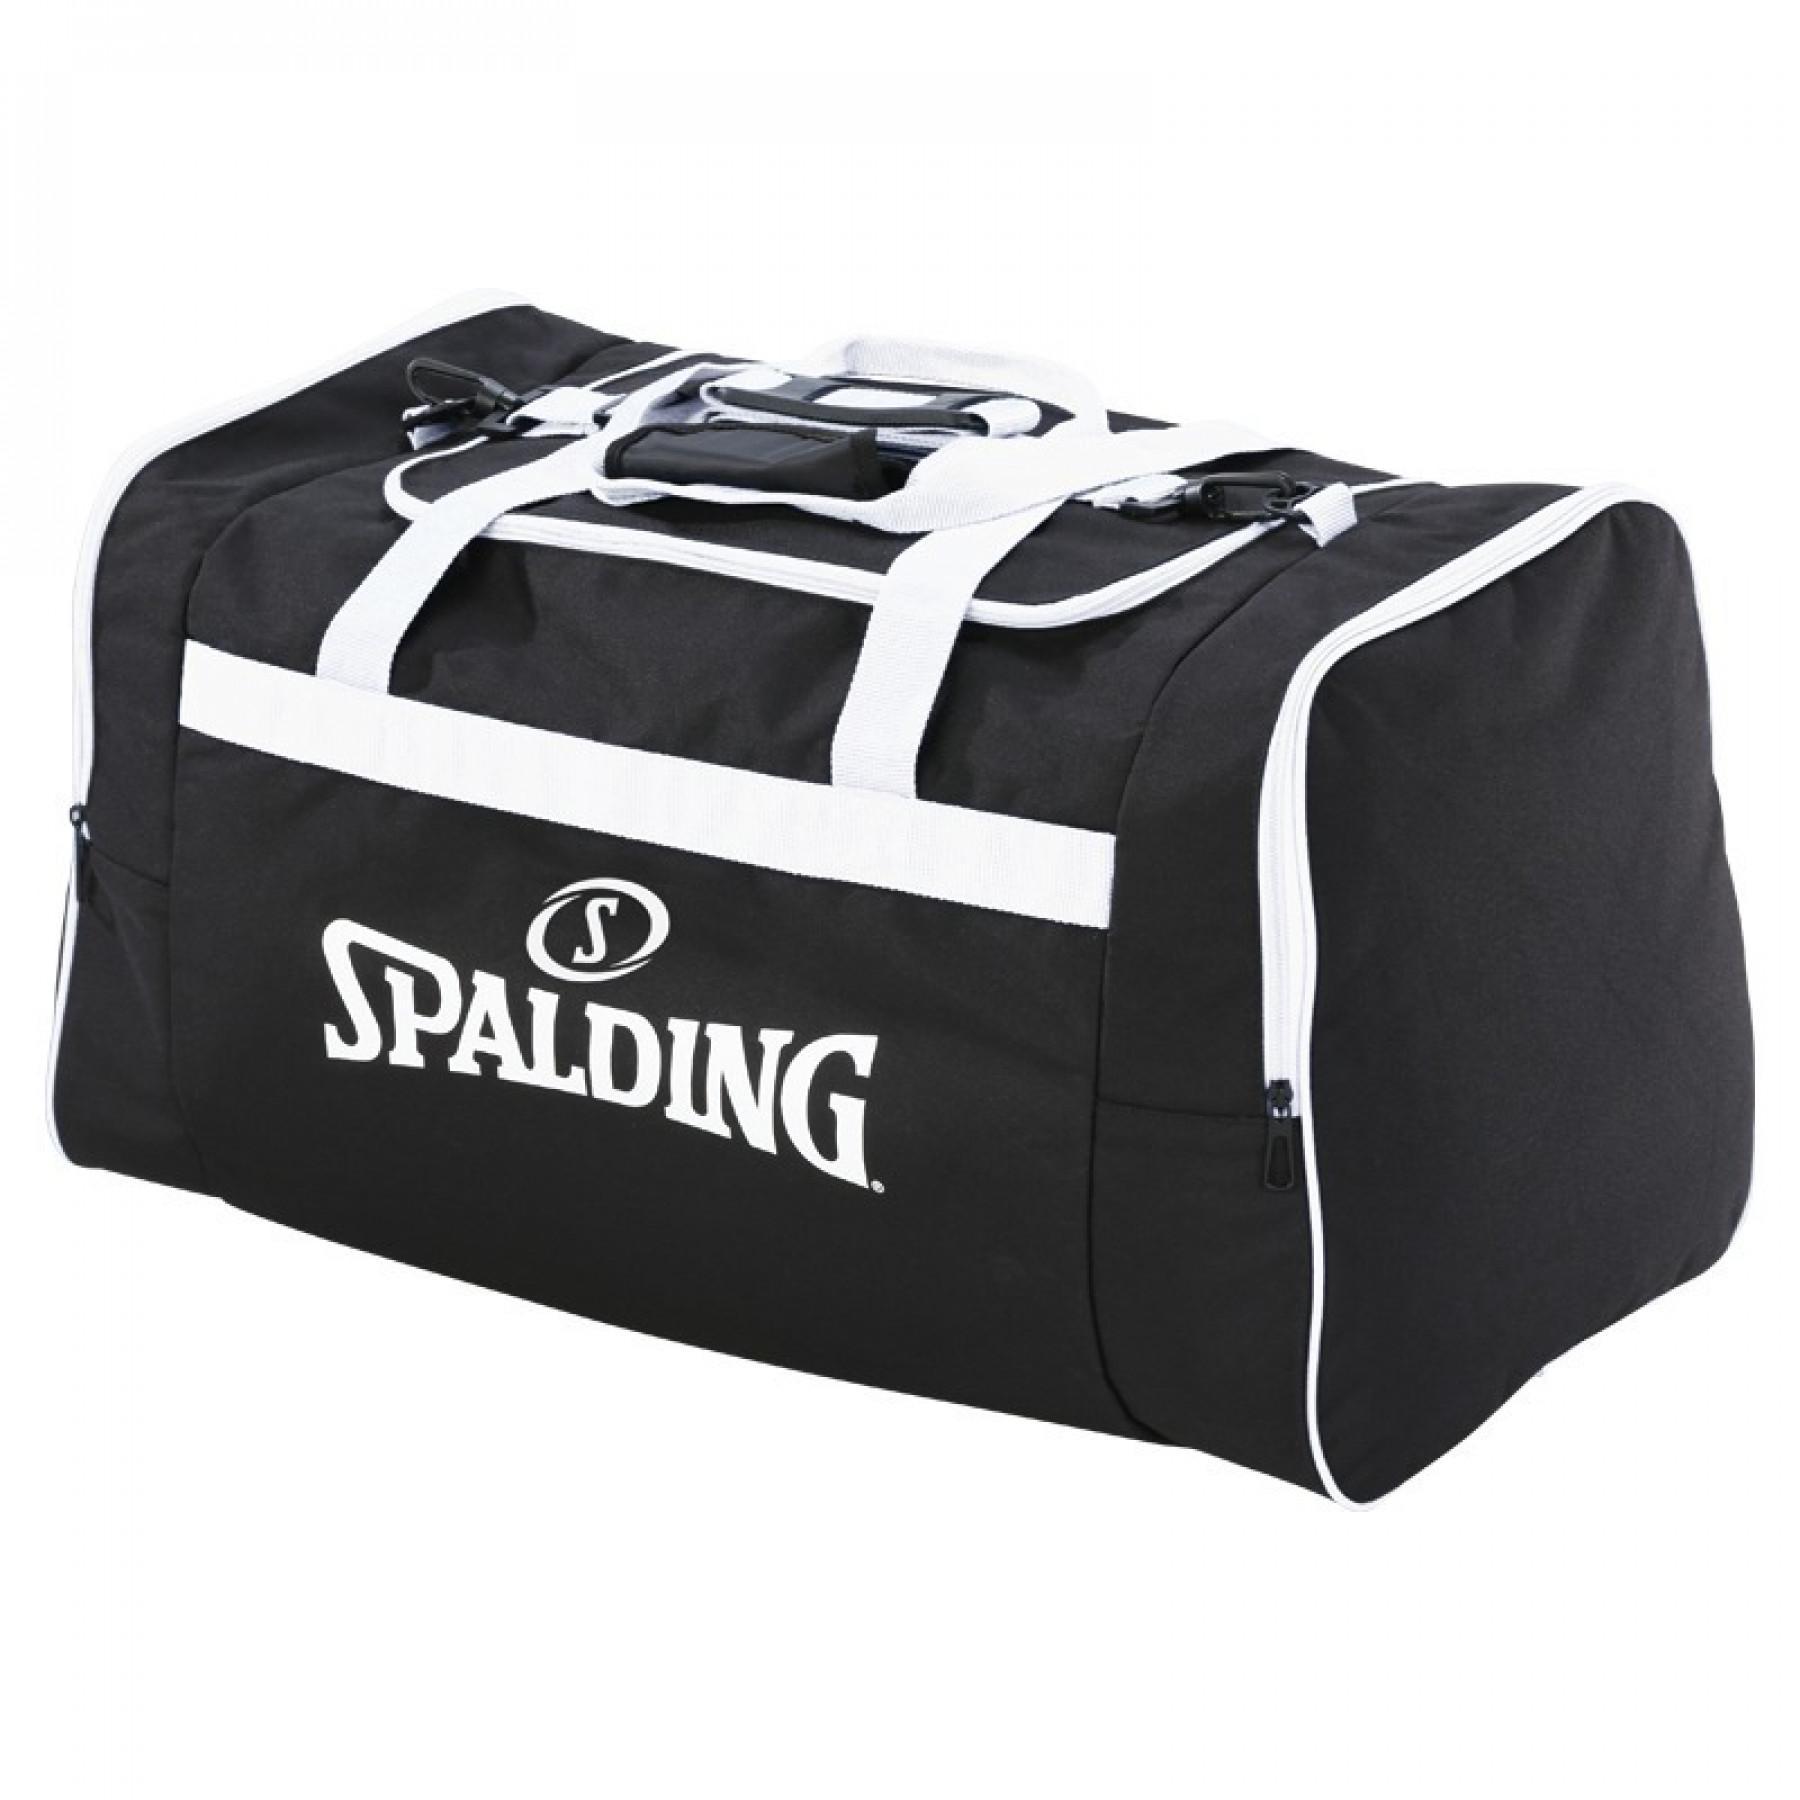 Spalding Sportbag Medium